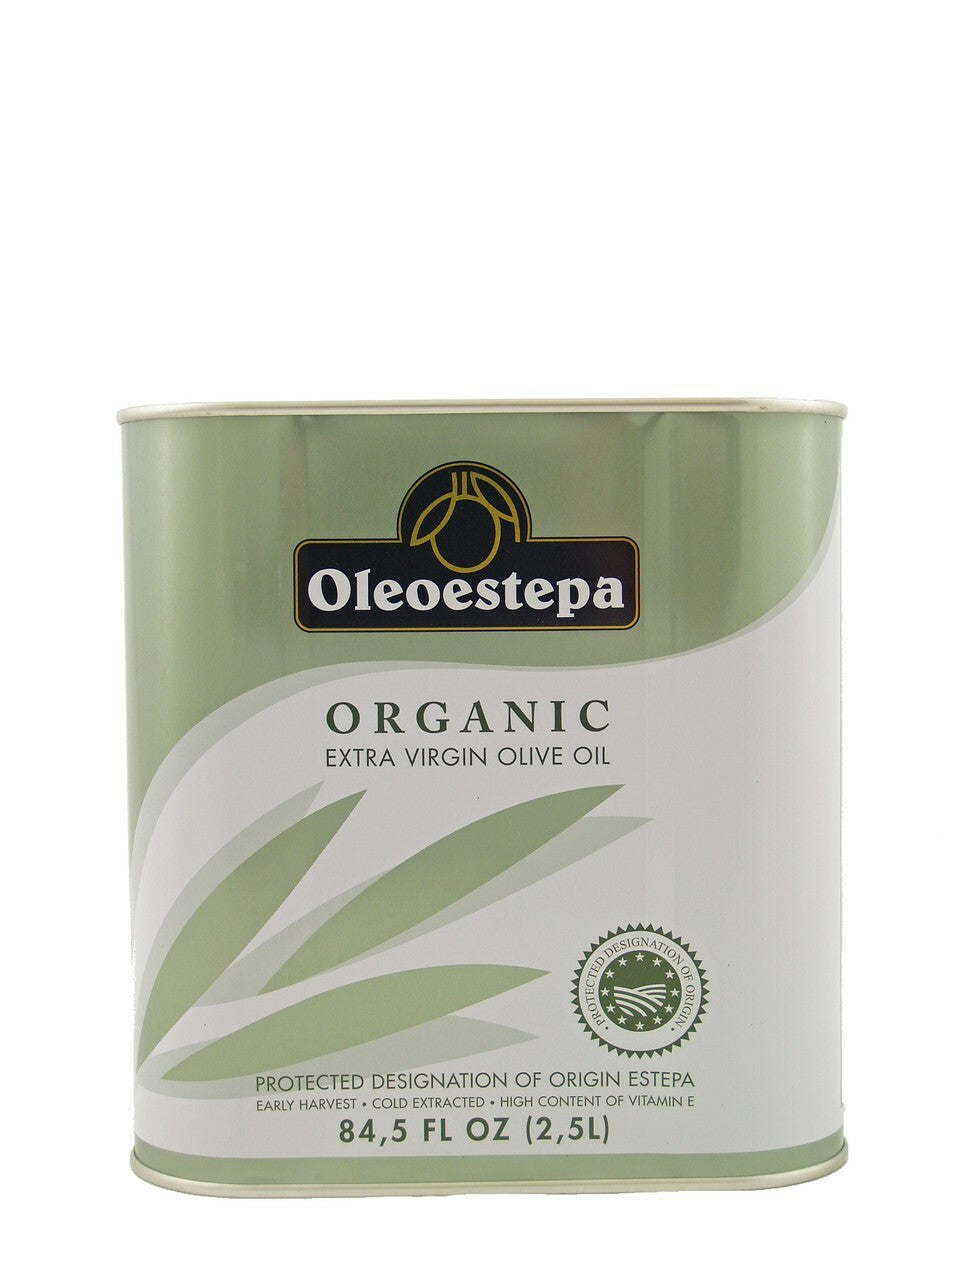 Oleoestepa Organic 2.5L Tin